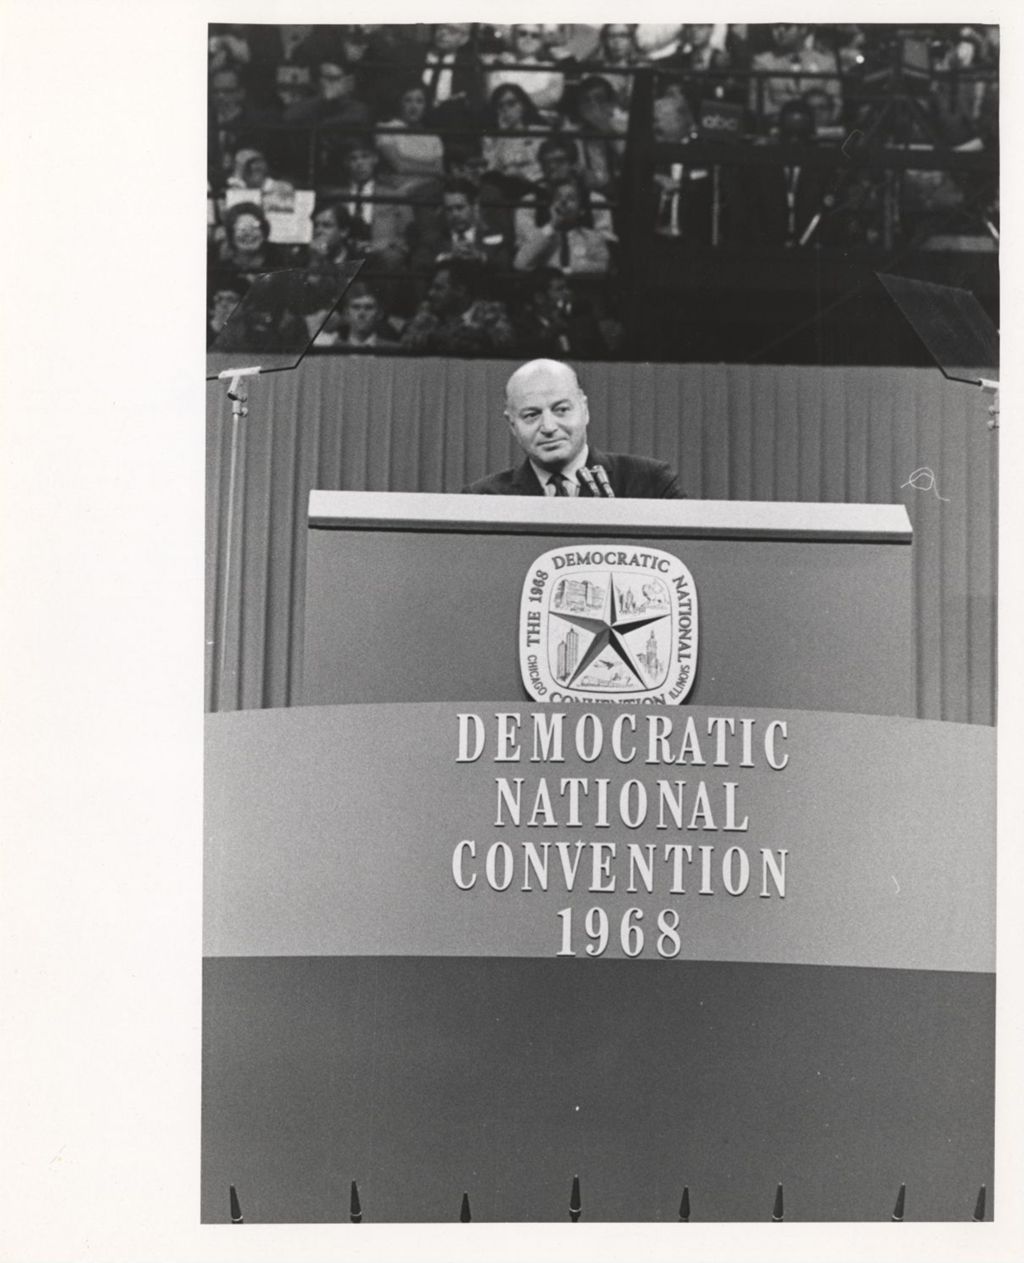 Miniature of Joseph Alioto at the Democratic National Convention